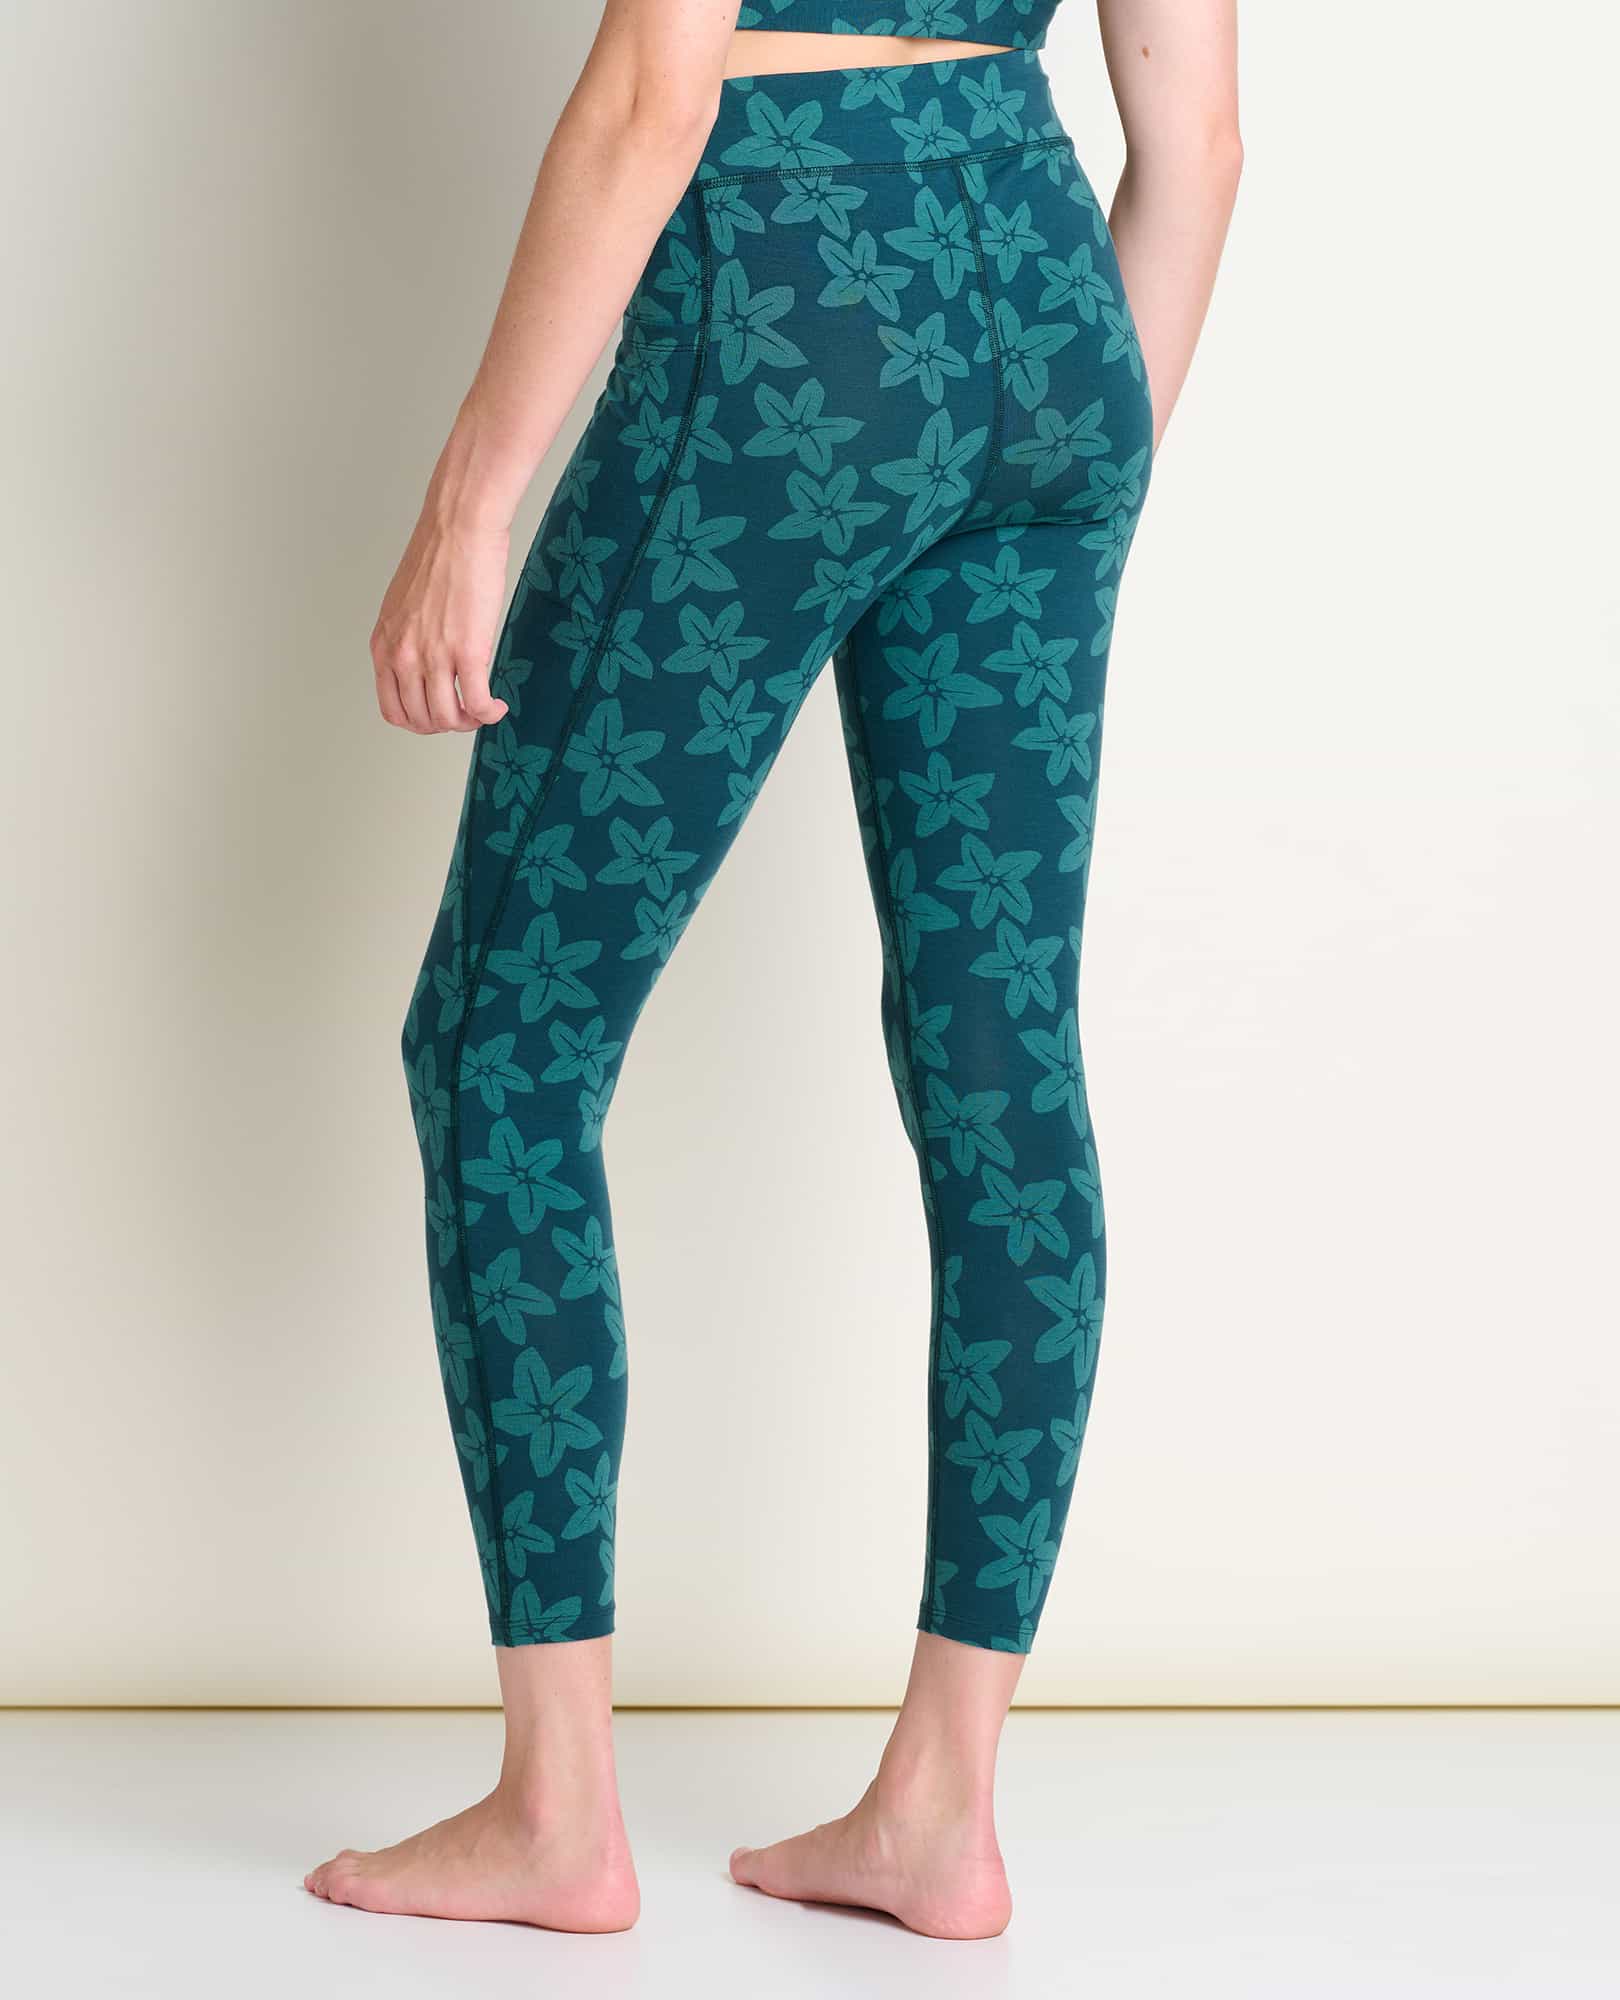 Nike womens black leggings floral print Logo tight fit 7/8 length Size XS  New